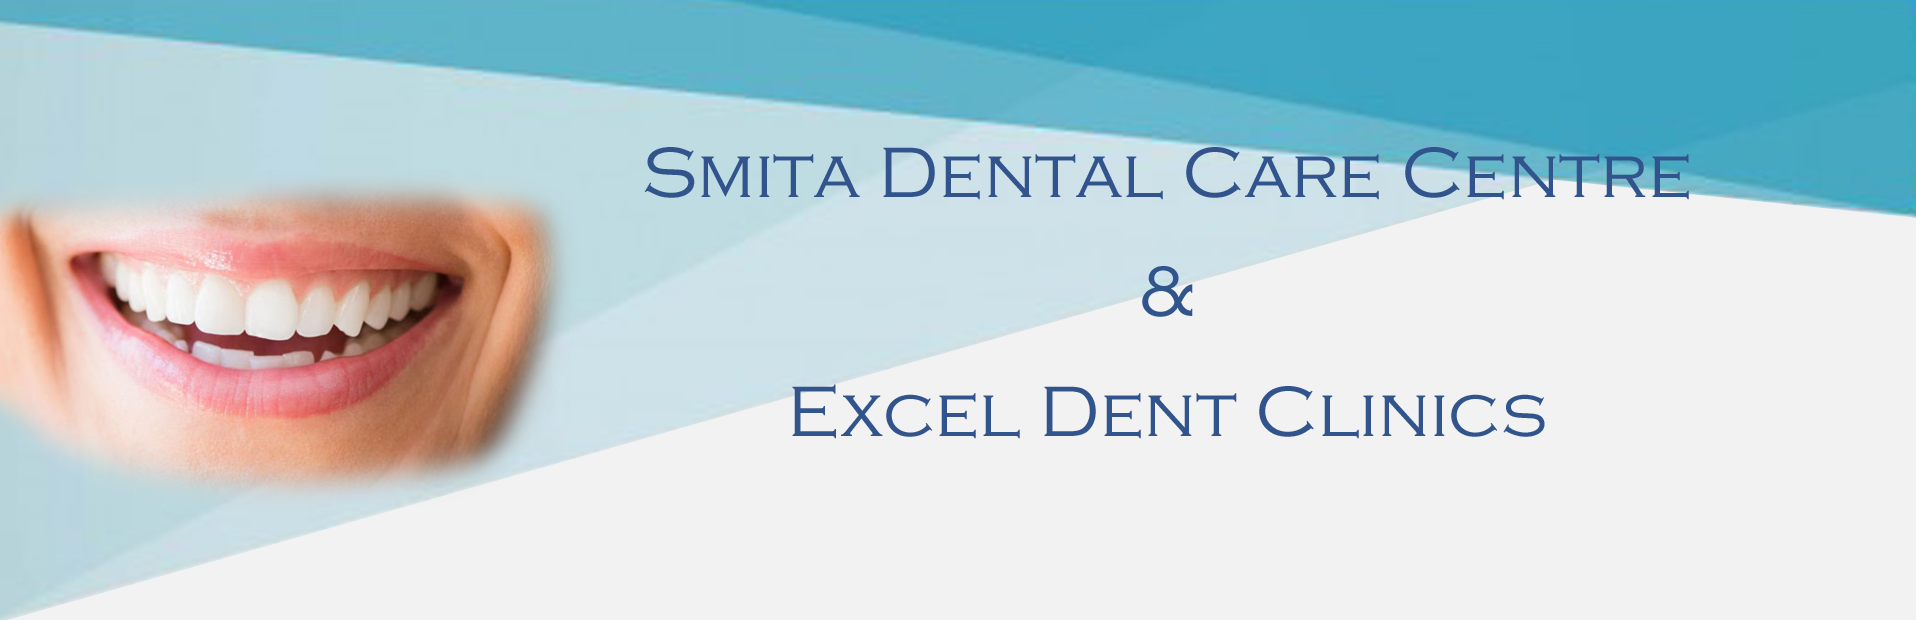 smita dental care banner